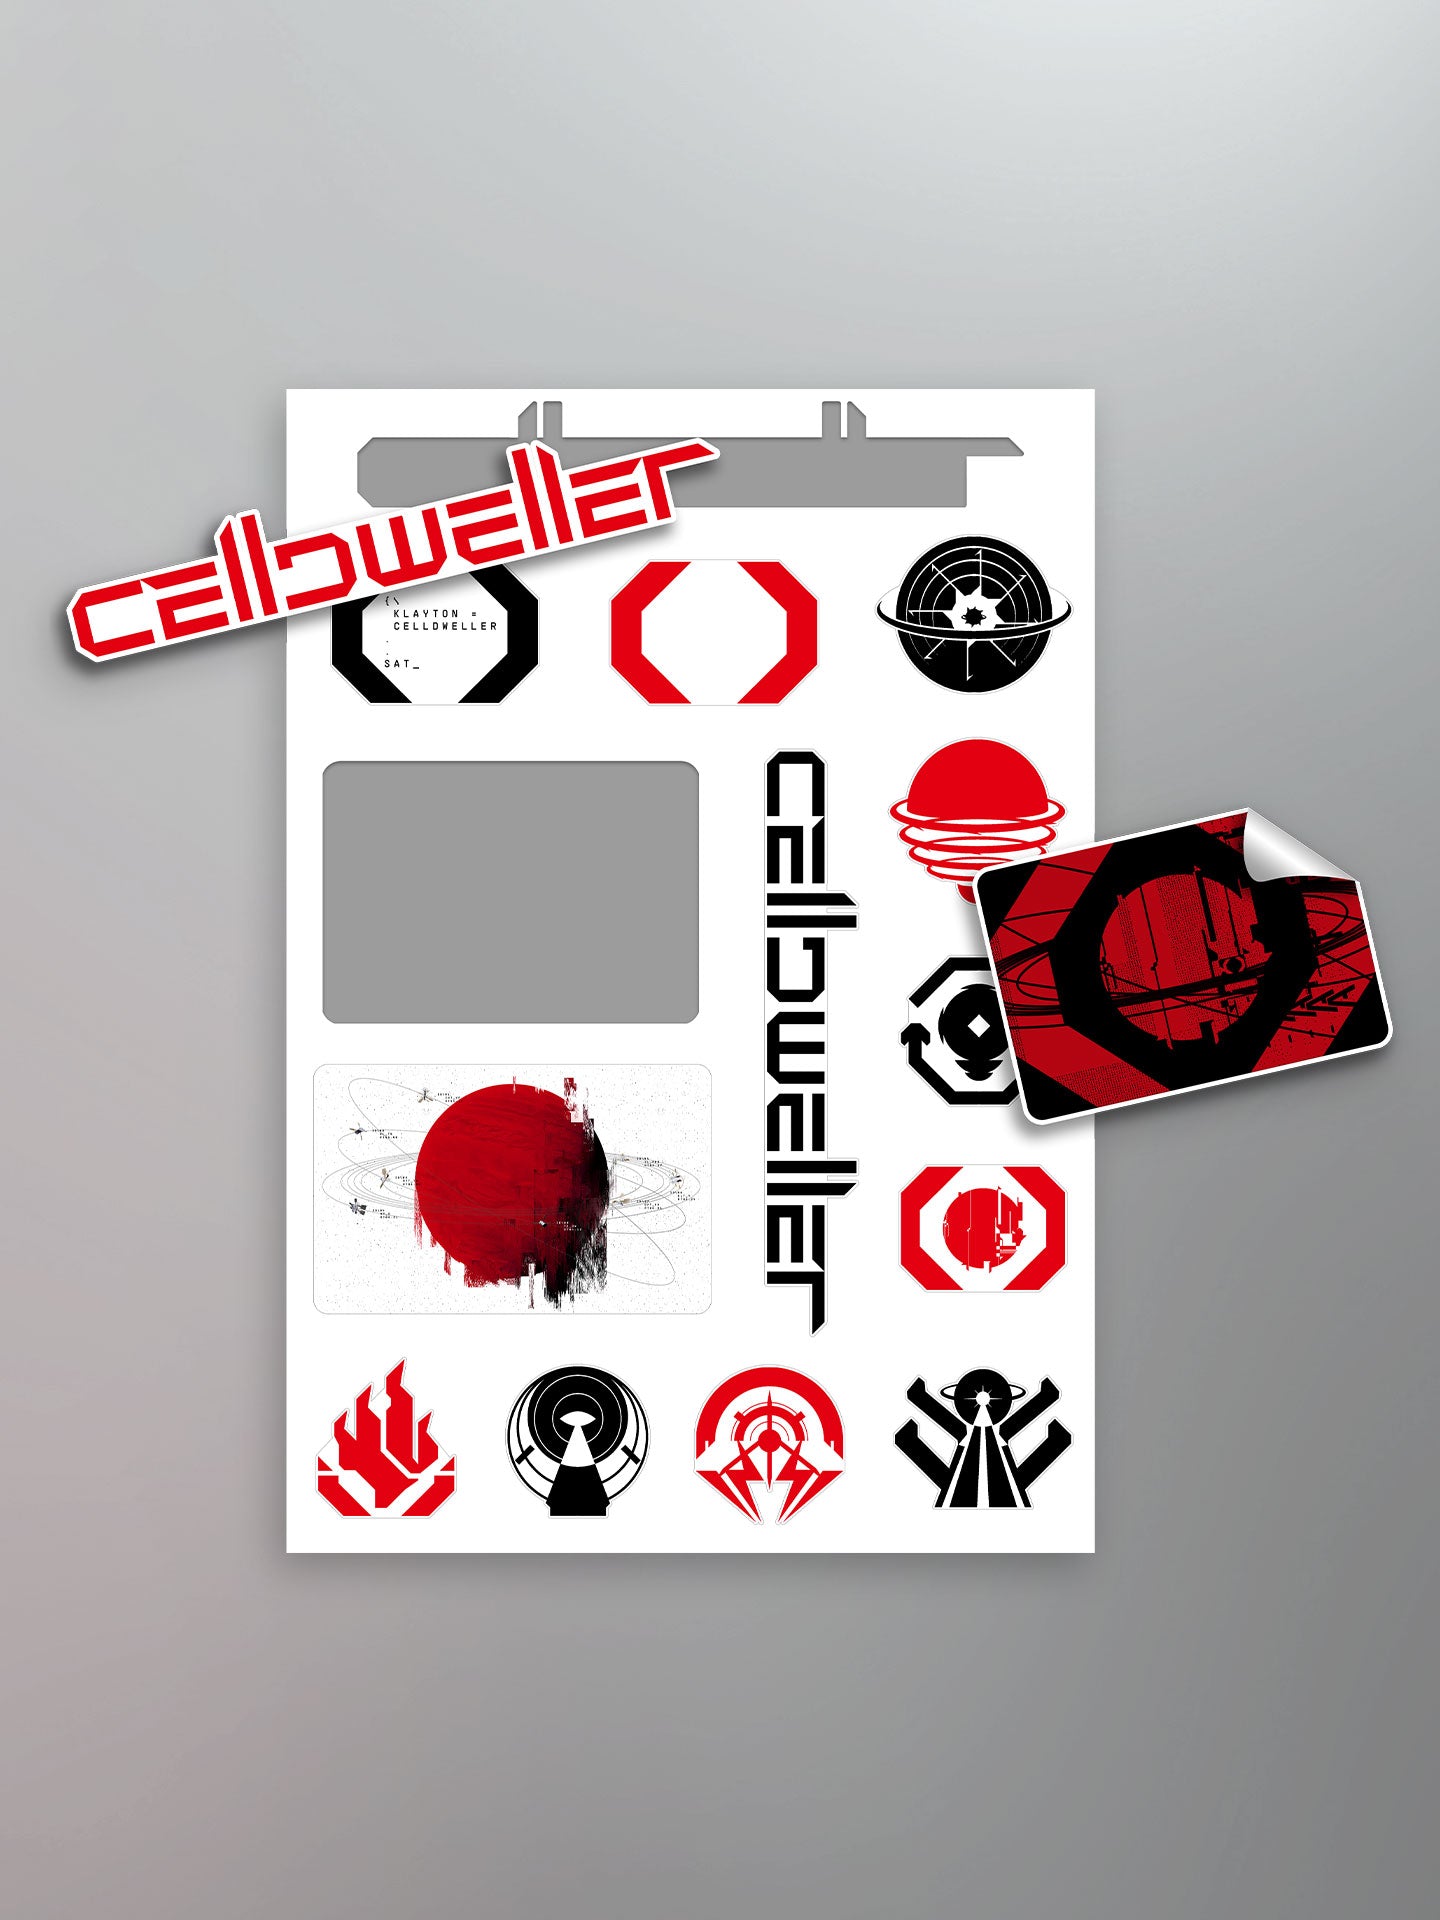 Celldweller - Satellites Sticker Sheet